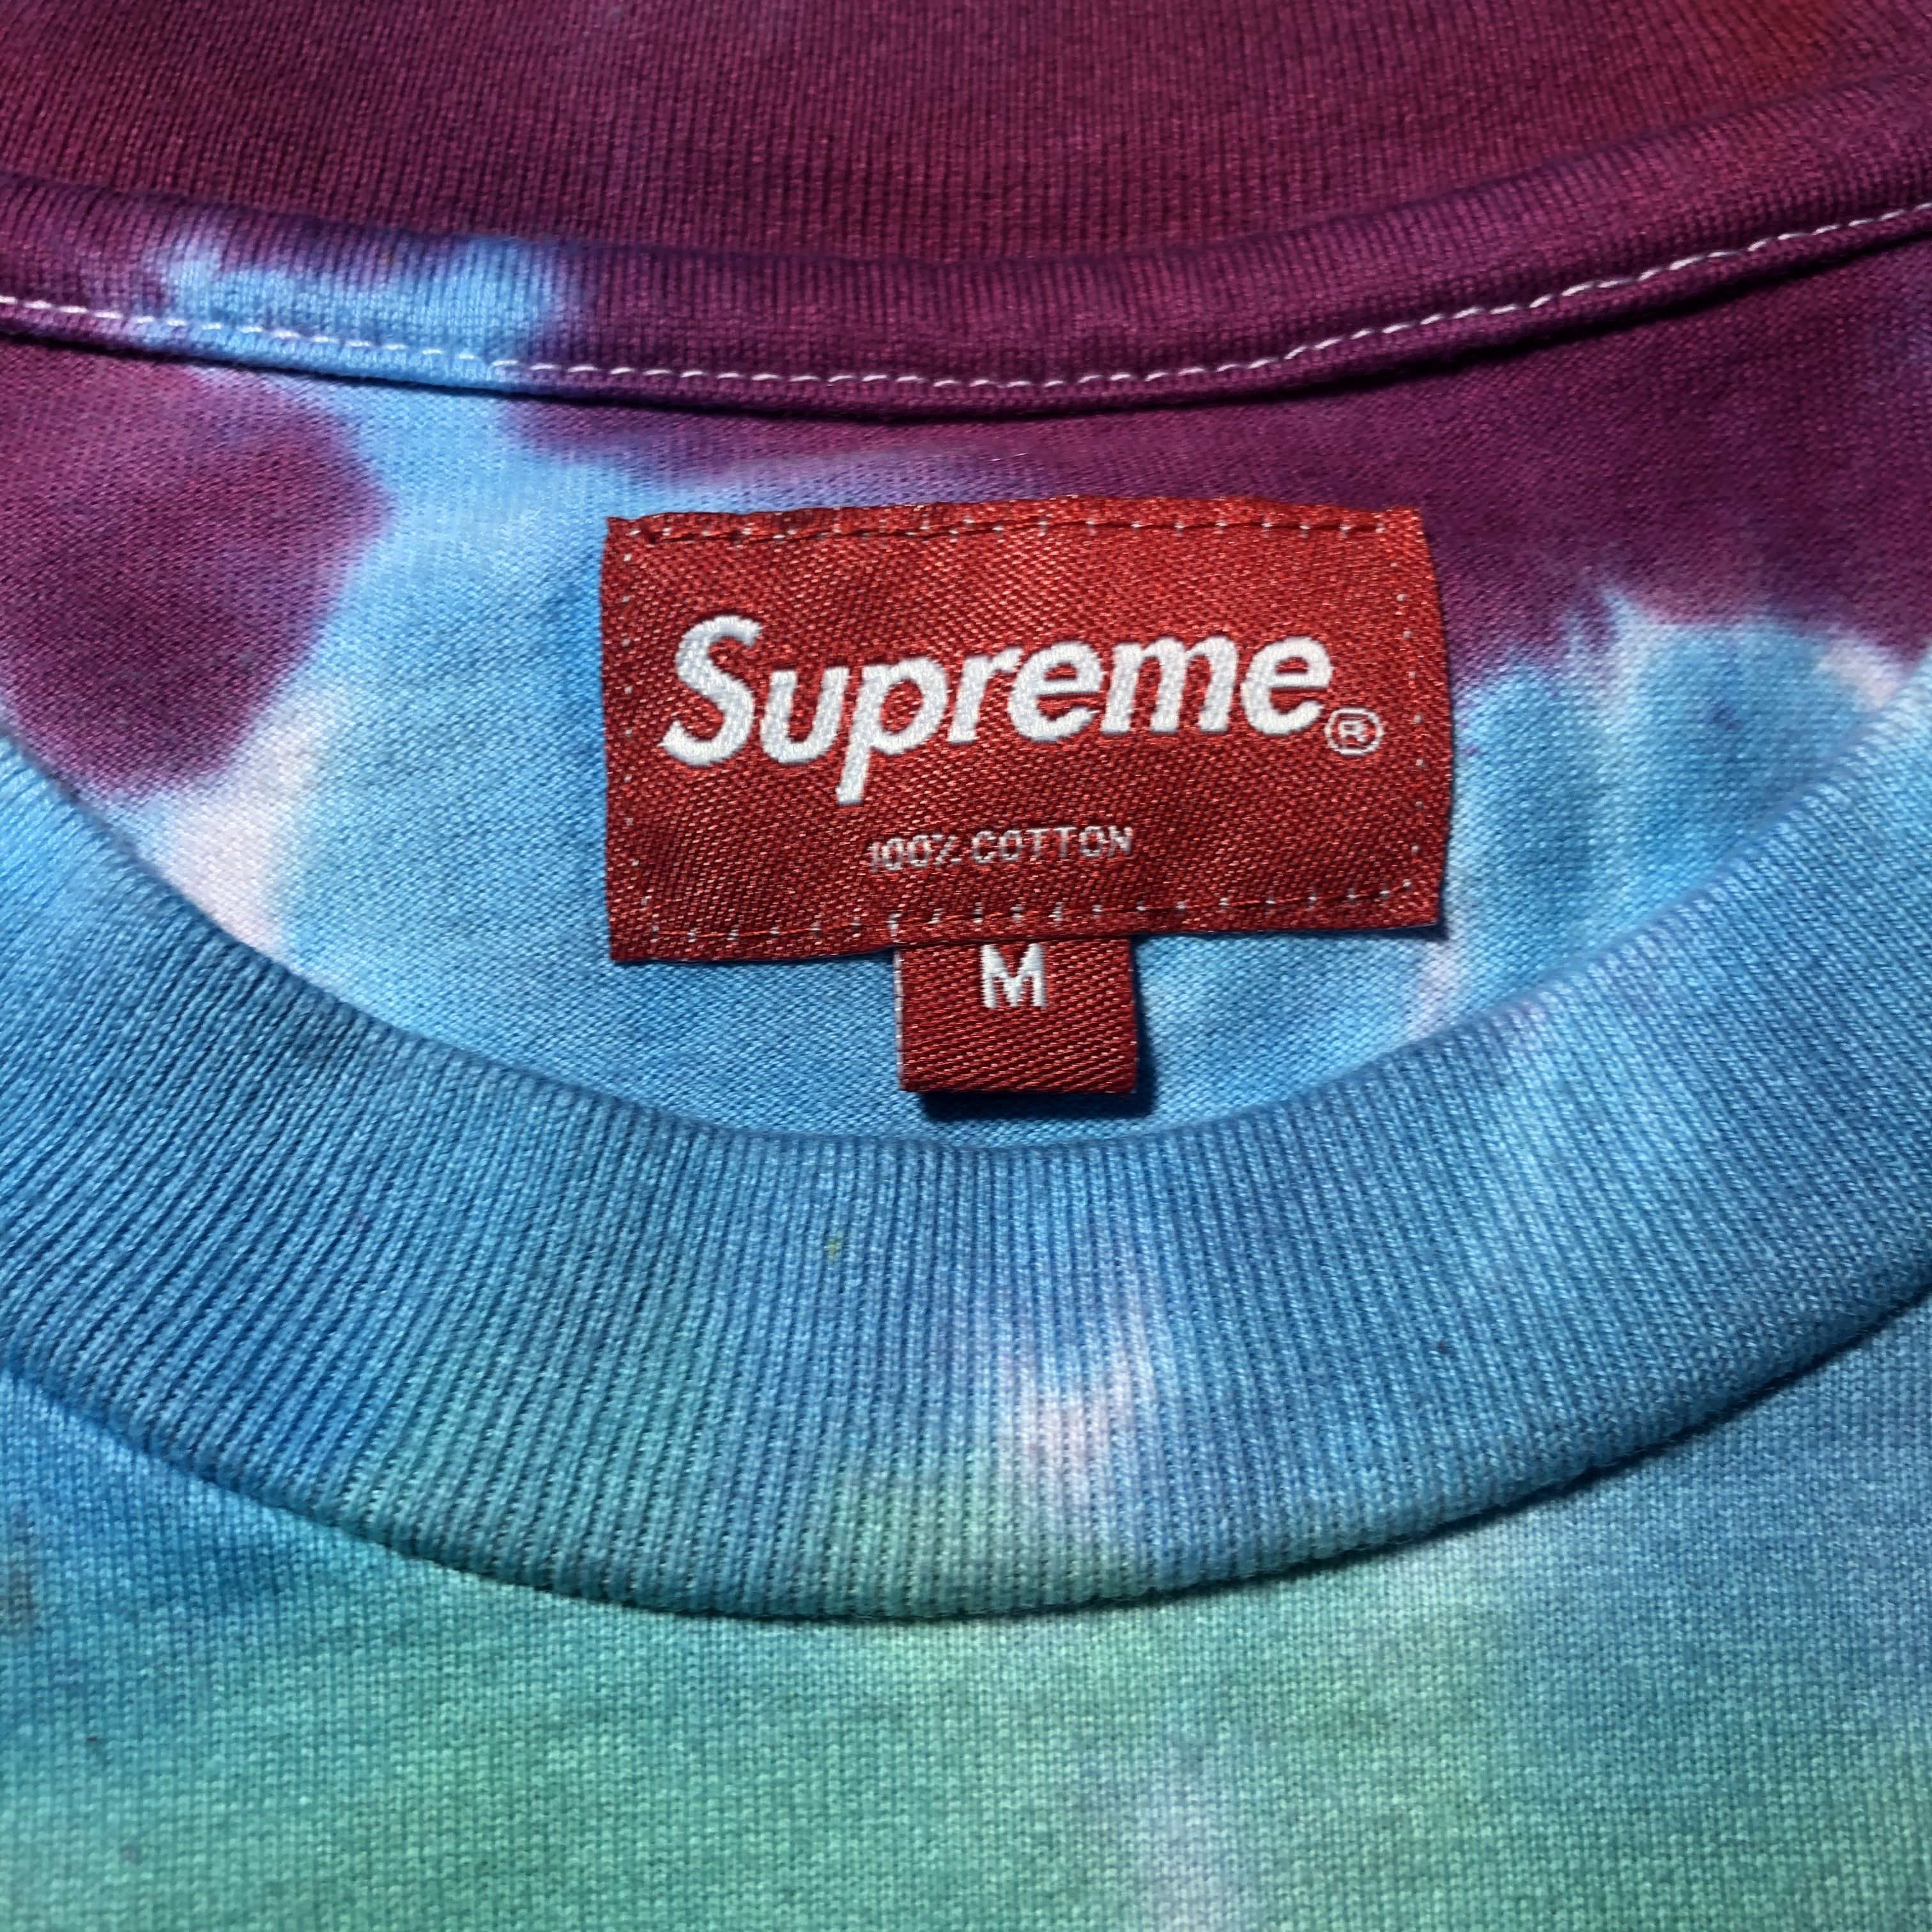 Supreme Medium - Supreme Rainbow Tie-dye Overdyed L/S Top Shirt Size US M / EU 48-50 / 2 - 4 Thumbnail